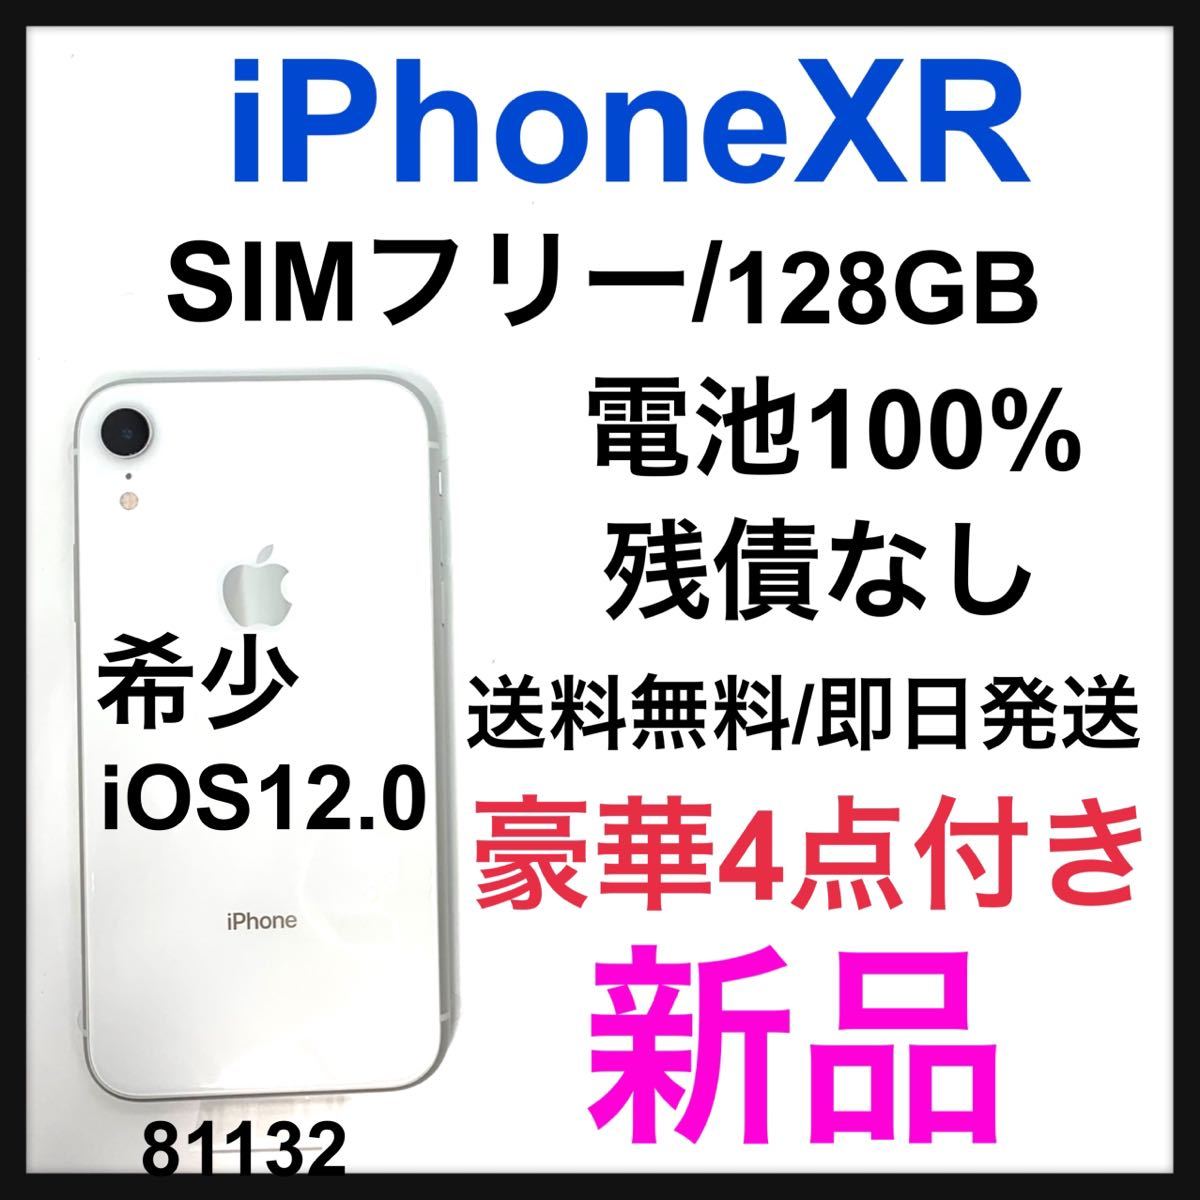 www.haoming.jp - iPhoneXR red 128GB SIMフリー 未使用の付属品全て